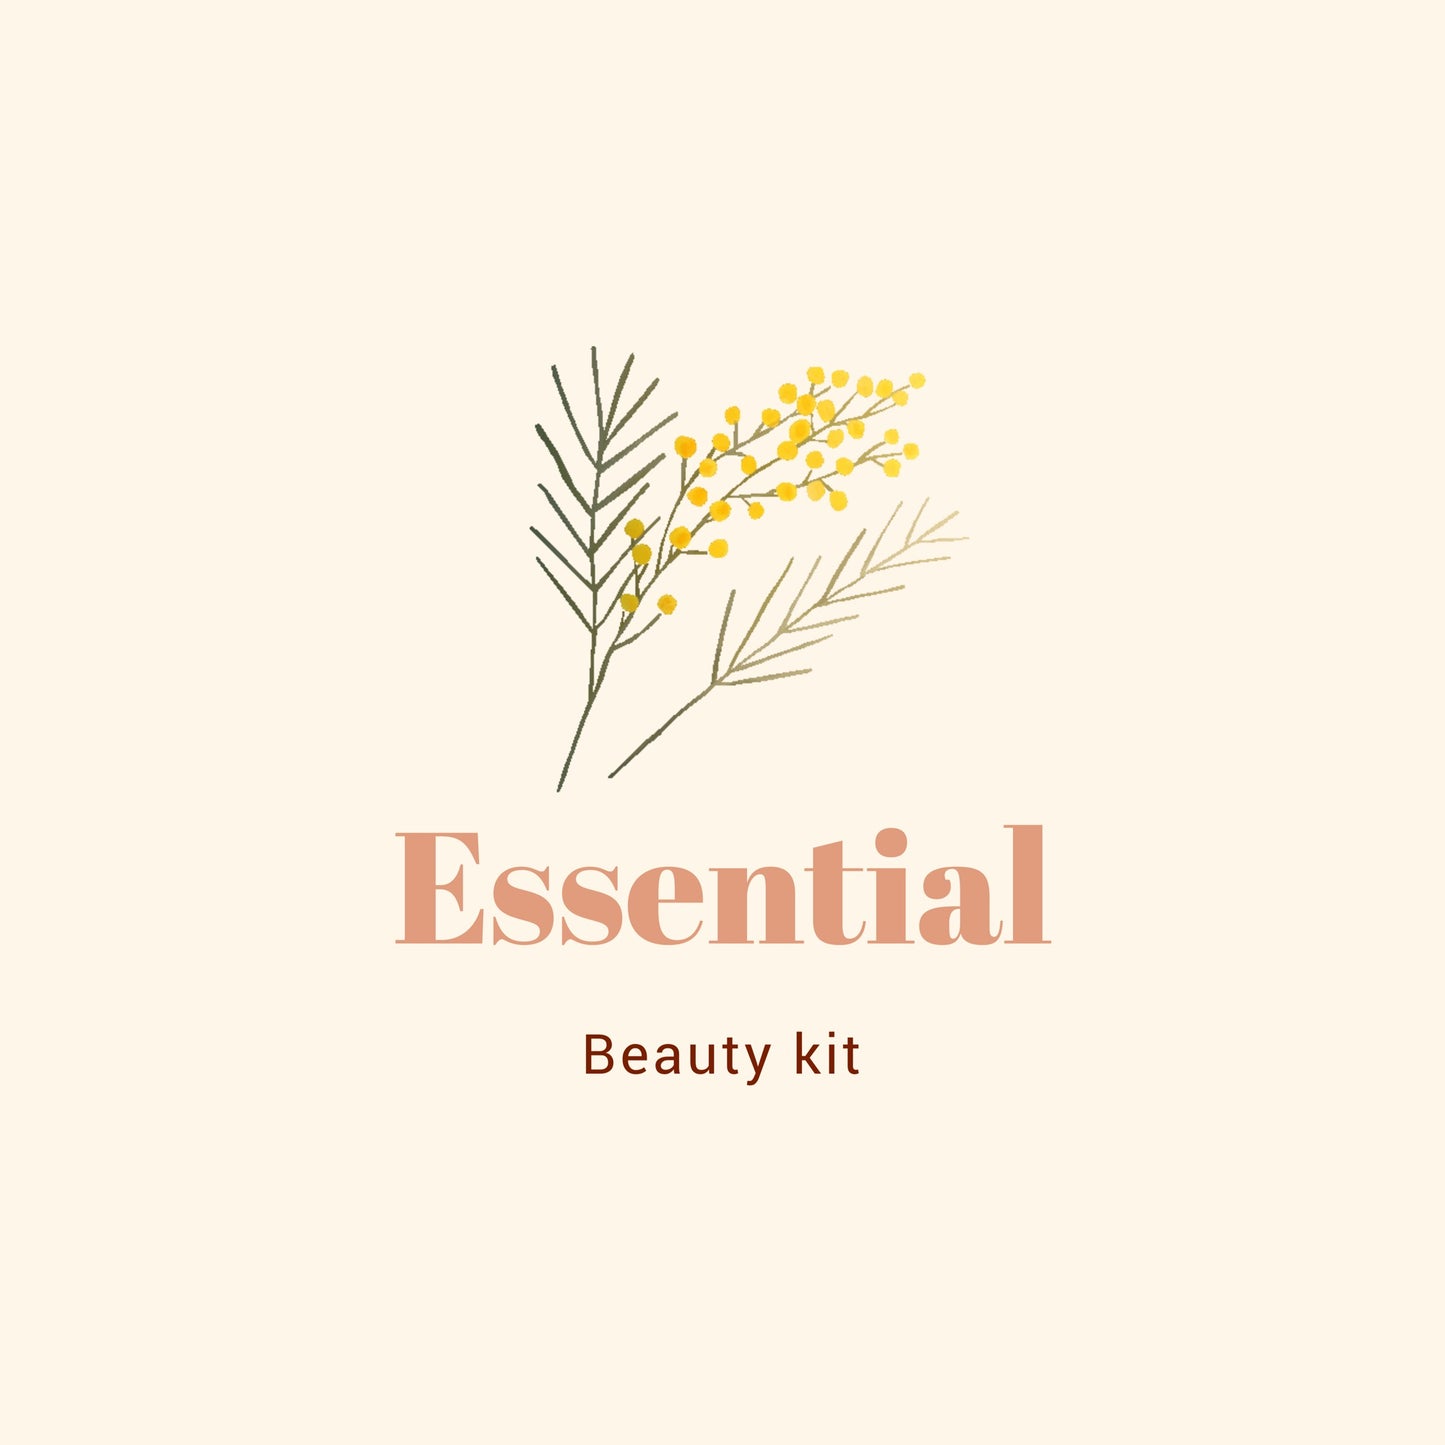 Essential beauty kit